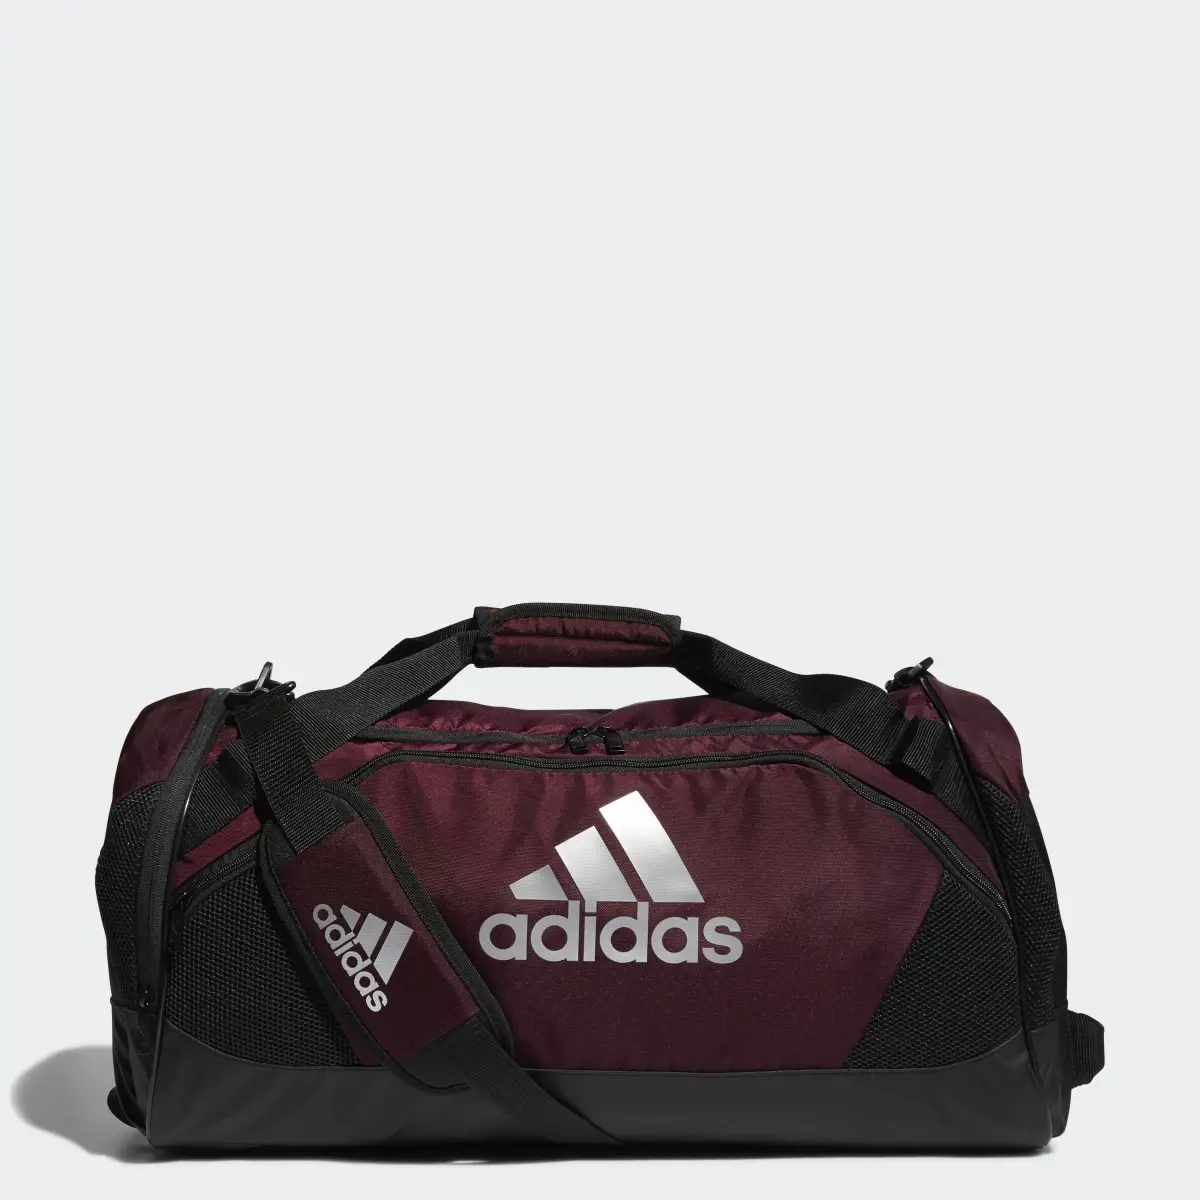 adidas Team Issue II Medium Duffel Bag | Duffle bag sports, Bags, Adidas  duffle bag